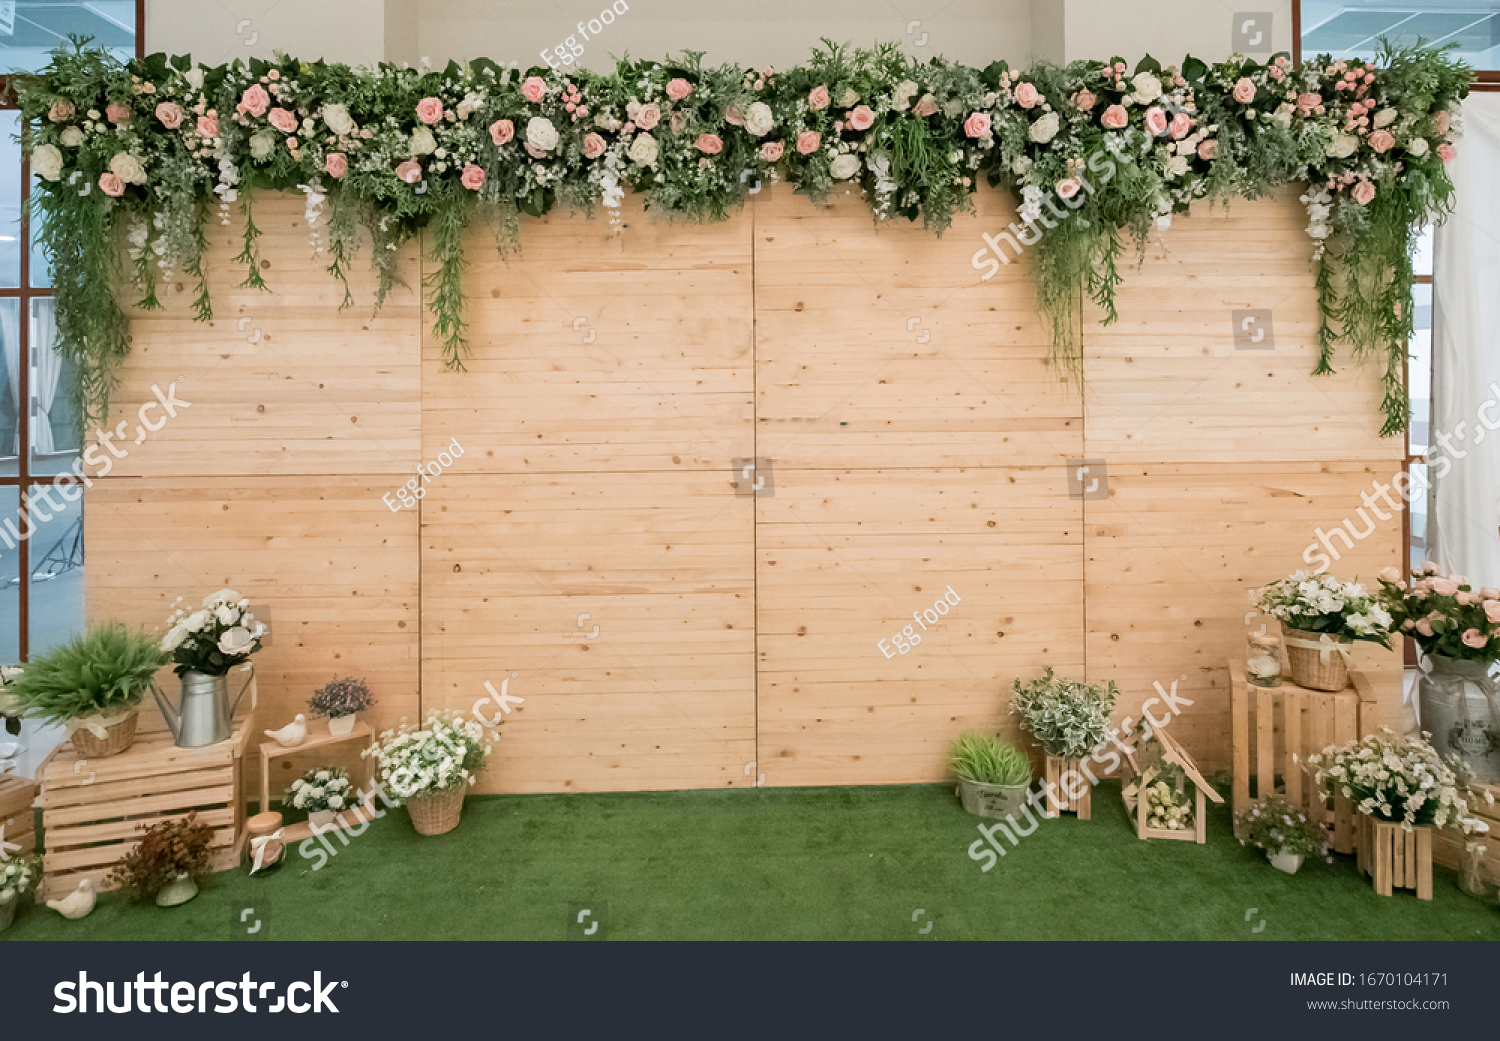 705,503 Wedding decoration backdrop Images, Stock Photos & Vectors ...